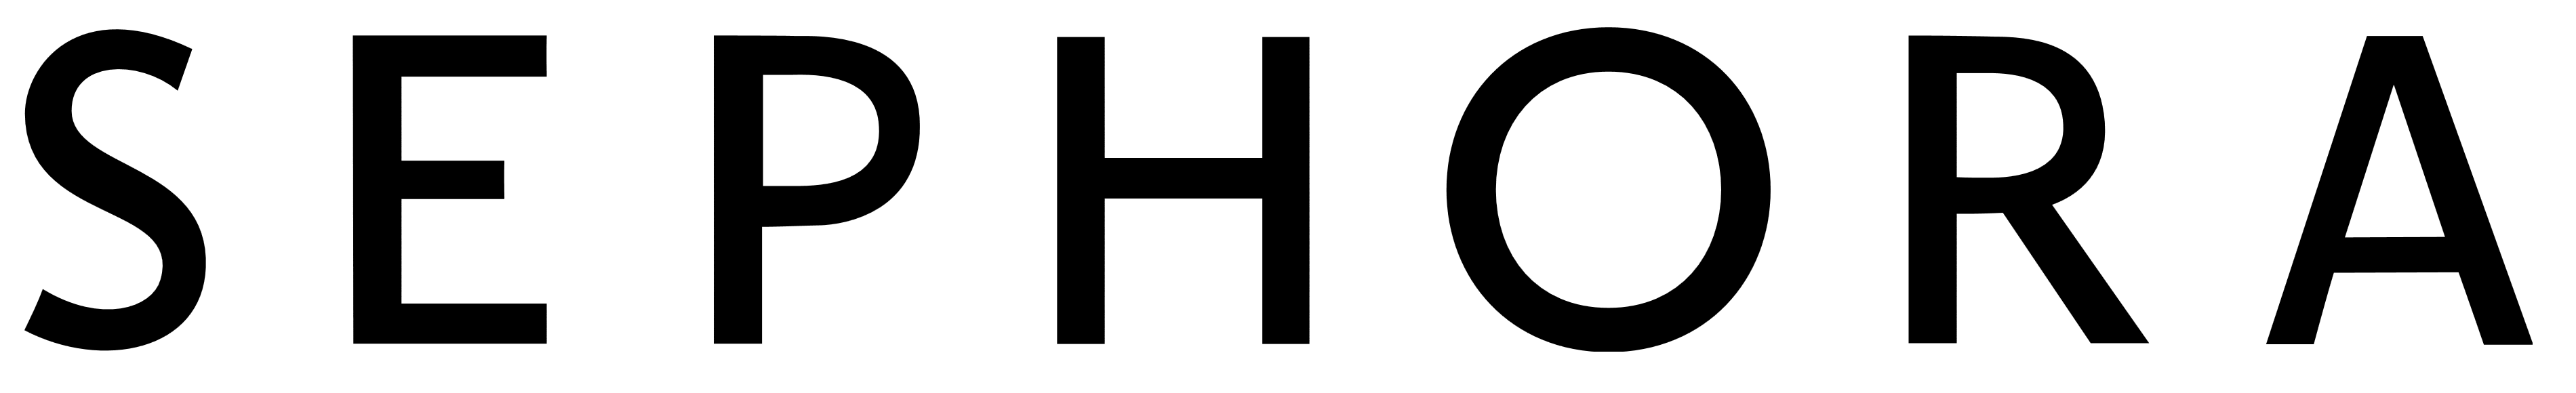 Sephora logo, logotype